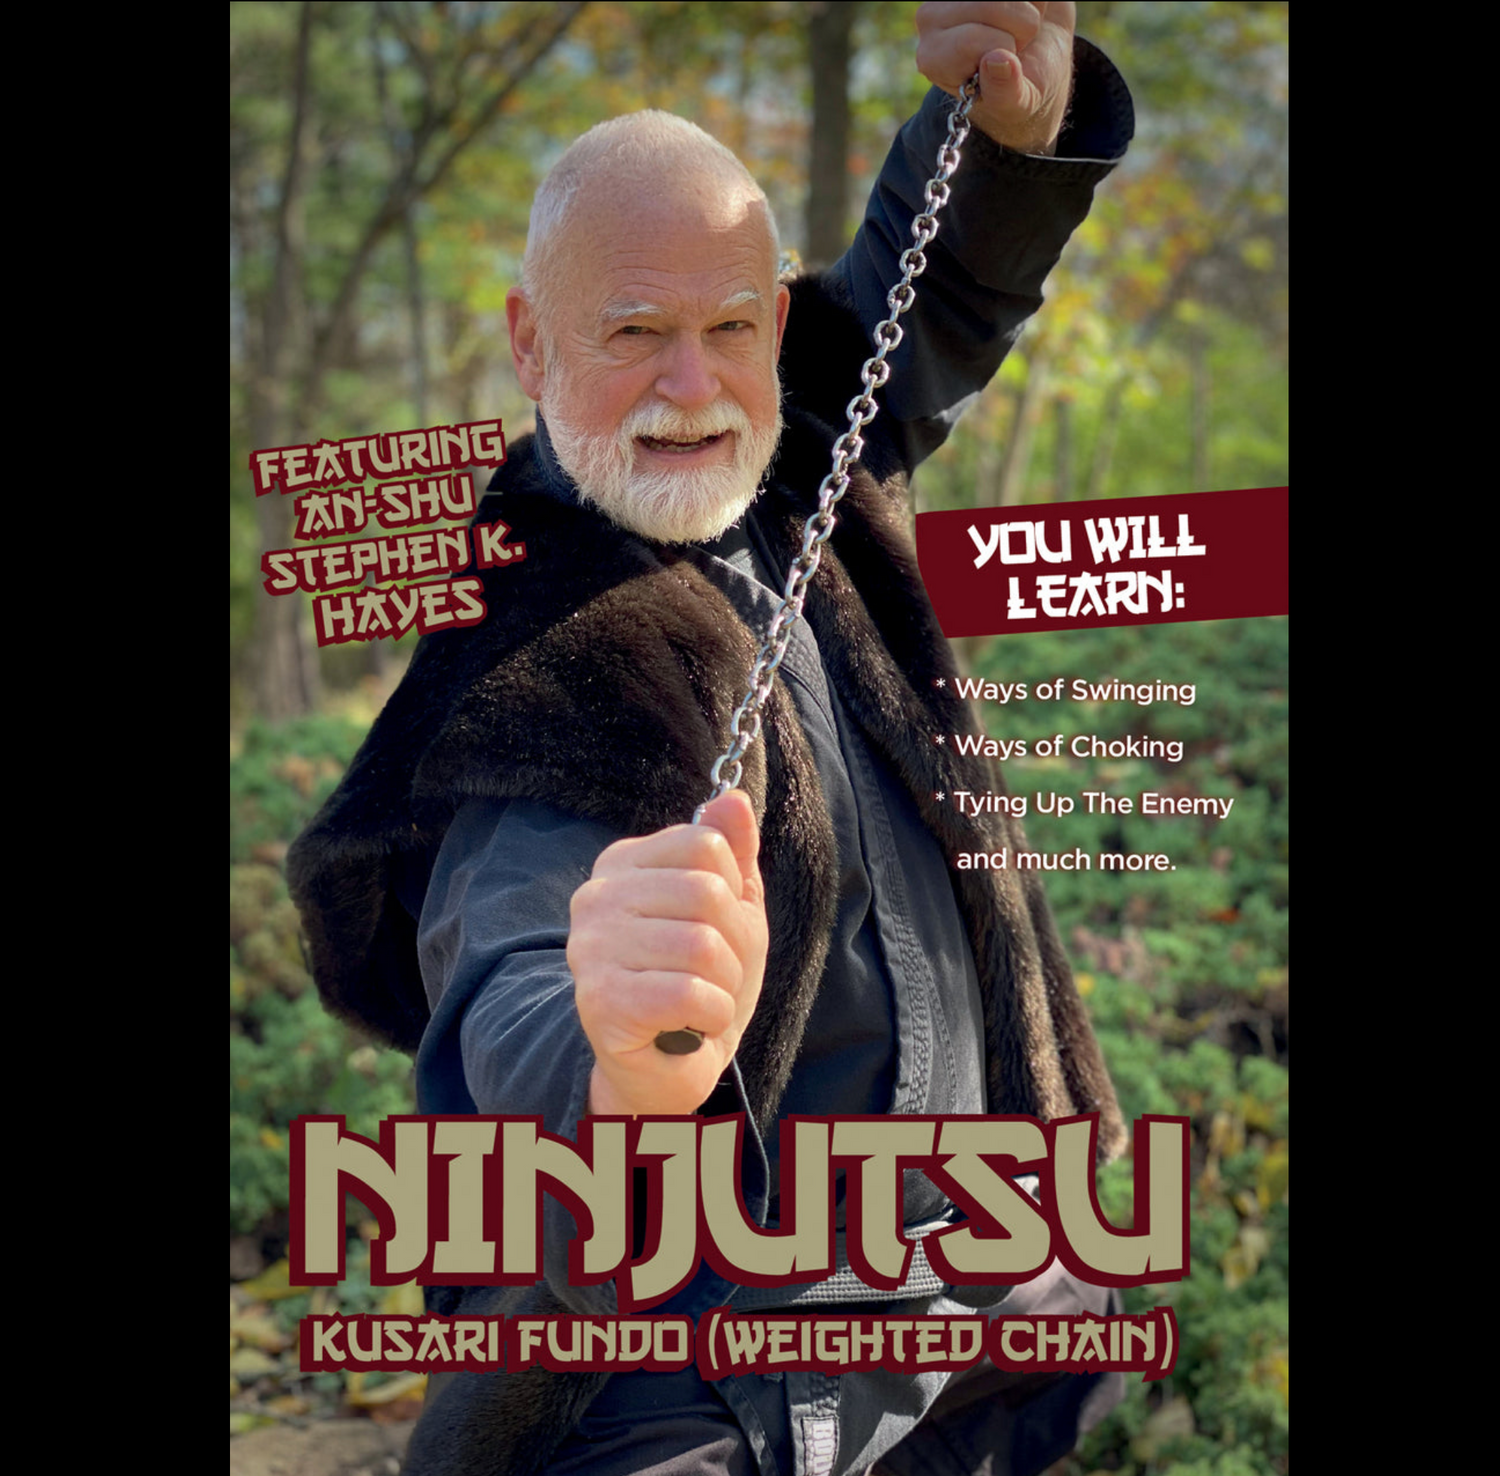 Ninjutsu Secrets 4: Kusari Fundo (Weighted Chain) with Stephen Hayes (On Demand)